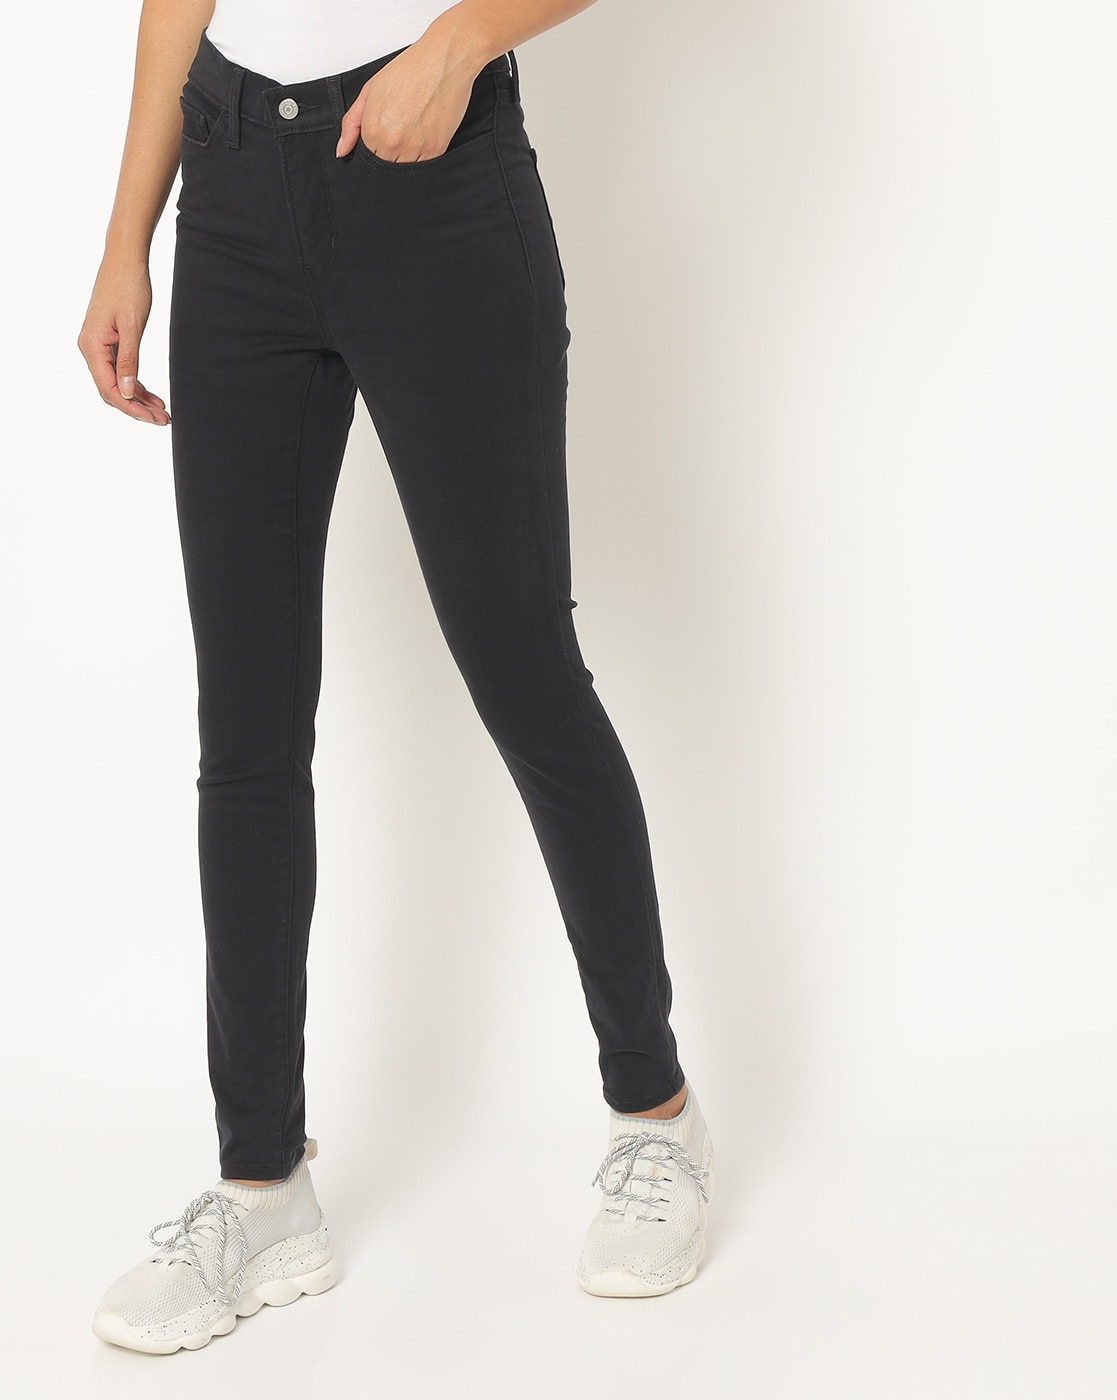 Buy Black Jeans & Jeggings for Women by LEVIS Online 